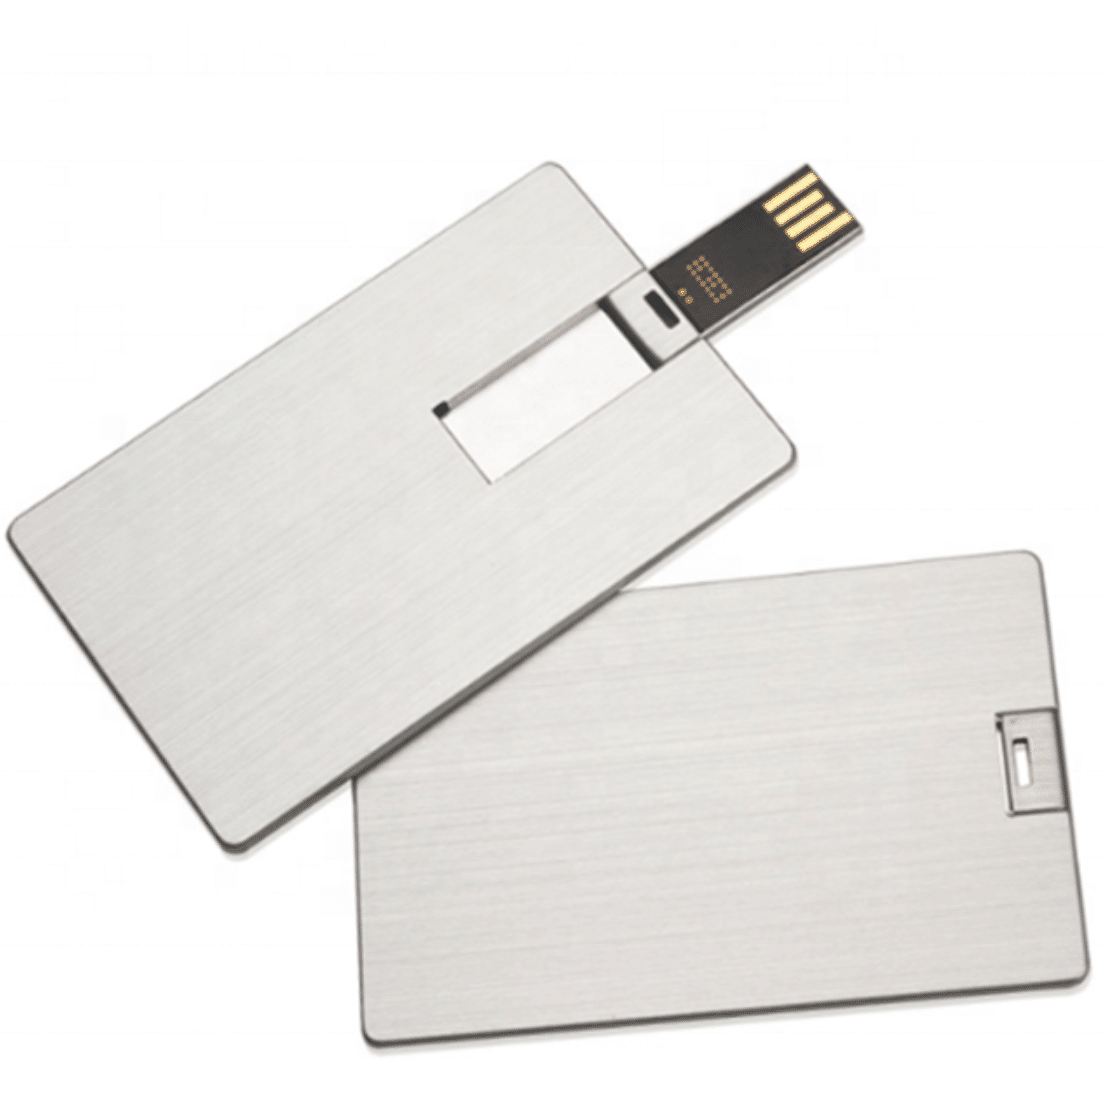 Smart Card Driver For Windows 7/8/8.1/10/11 64-Bit Download